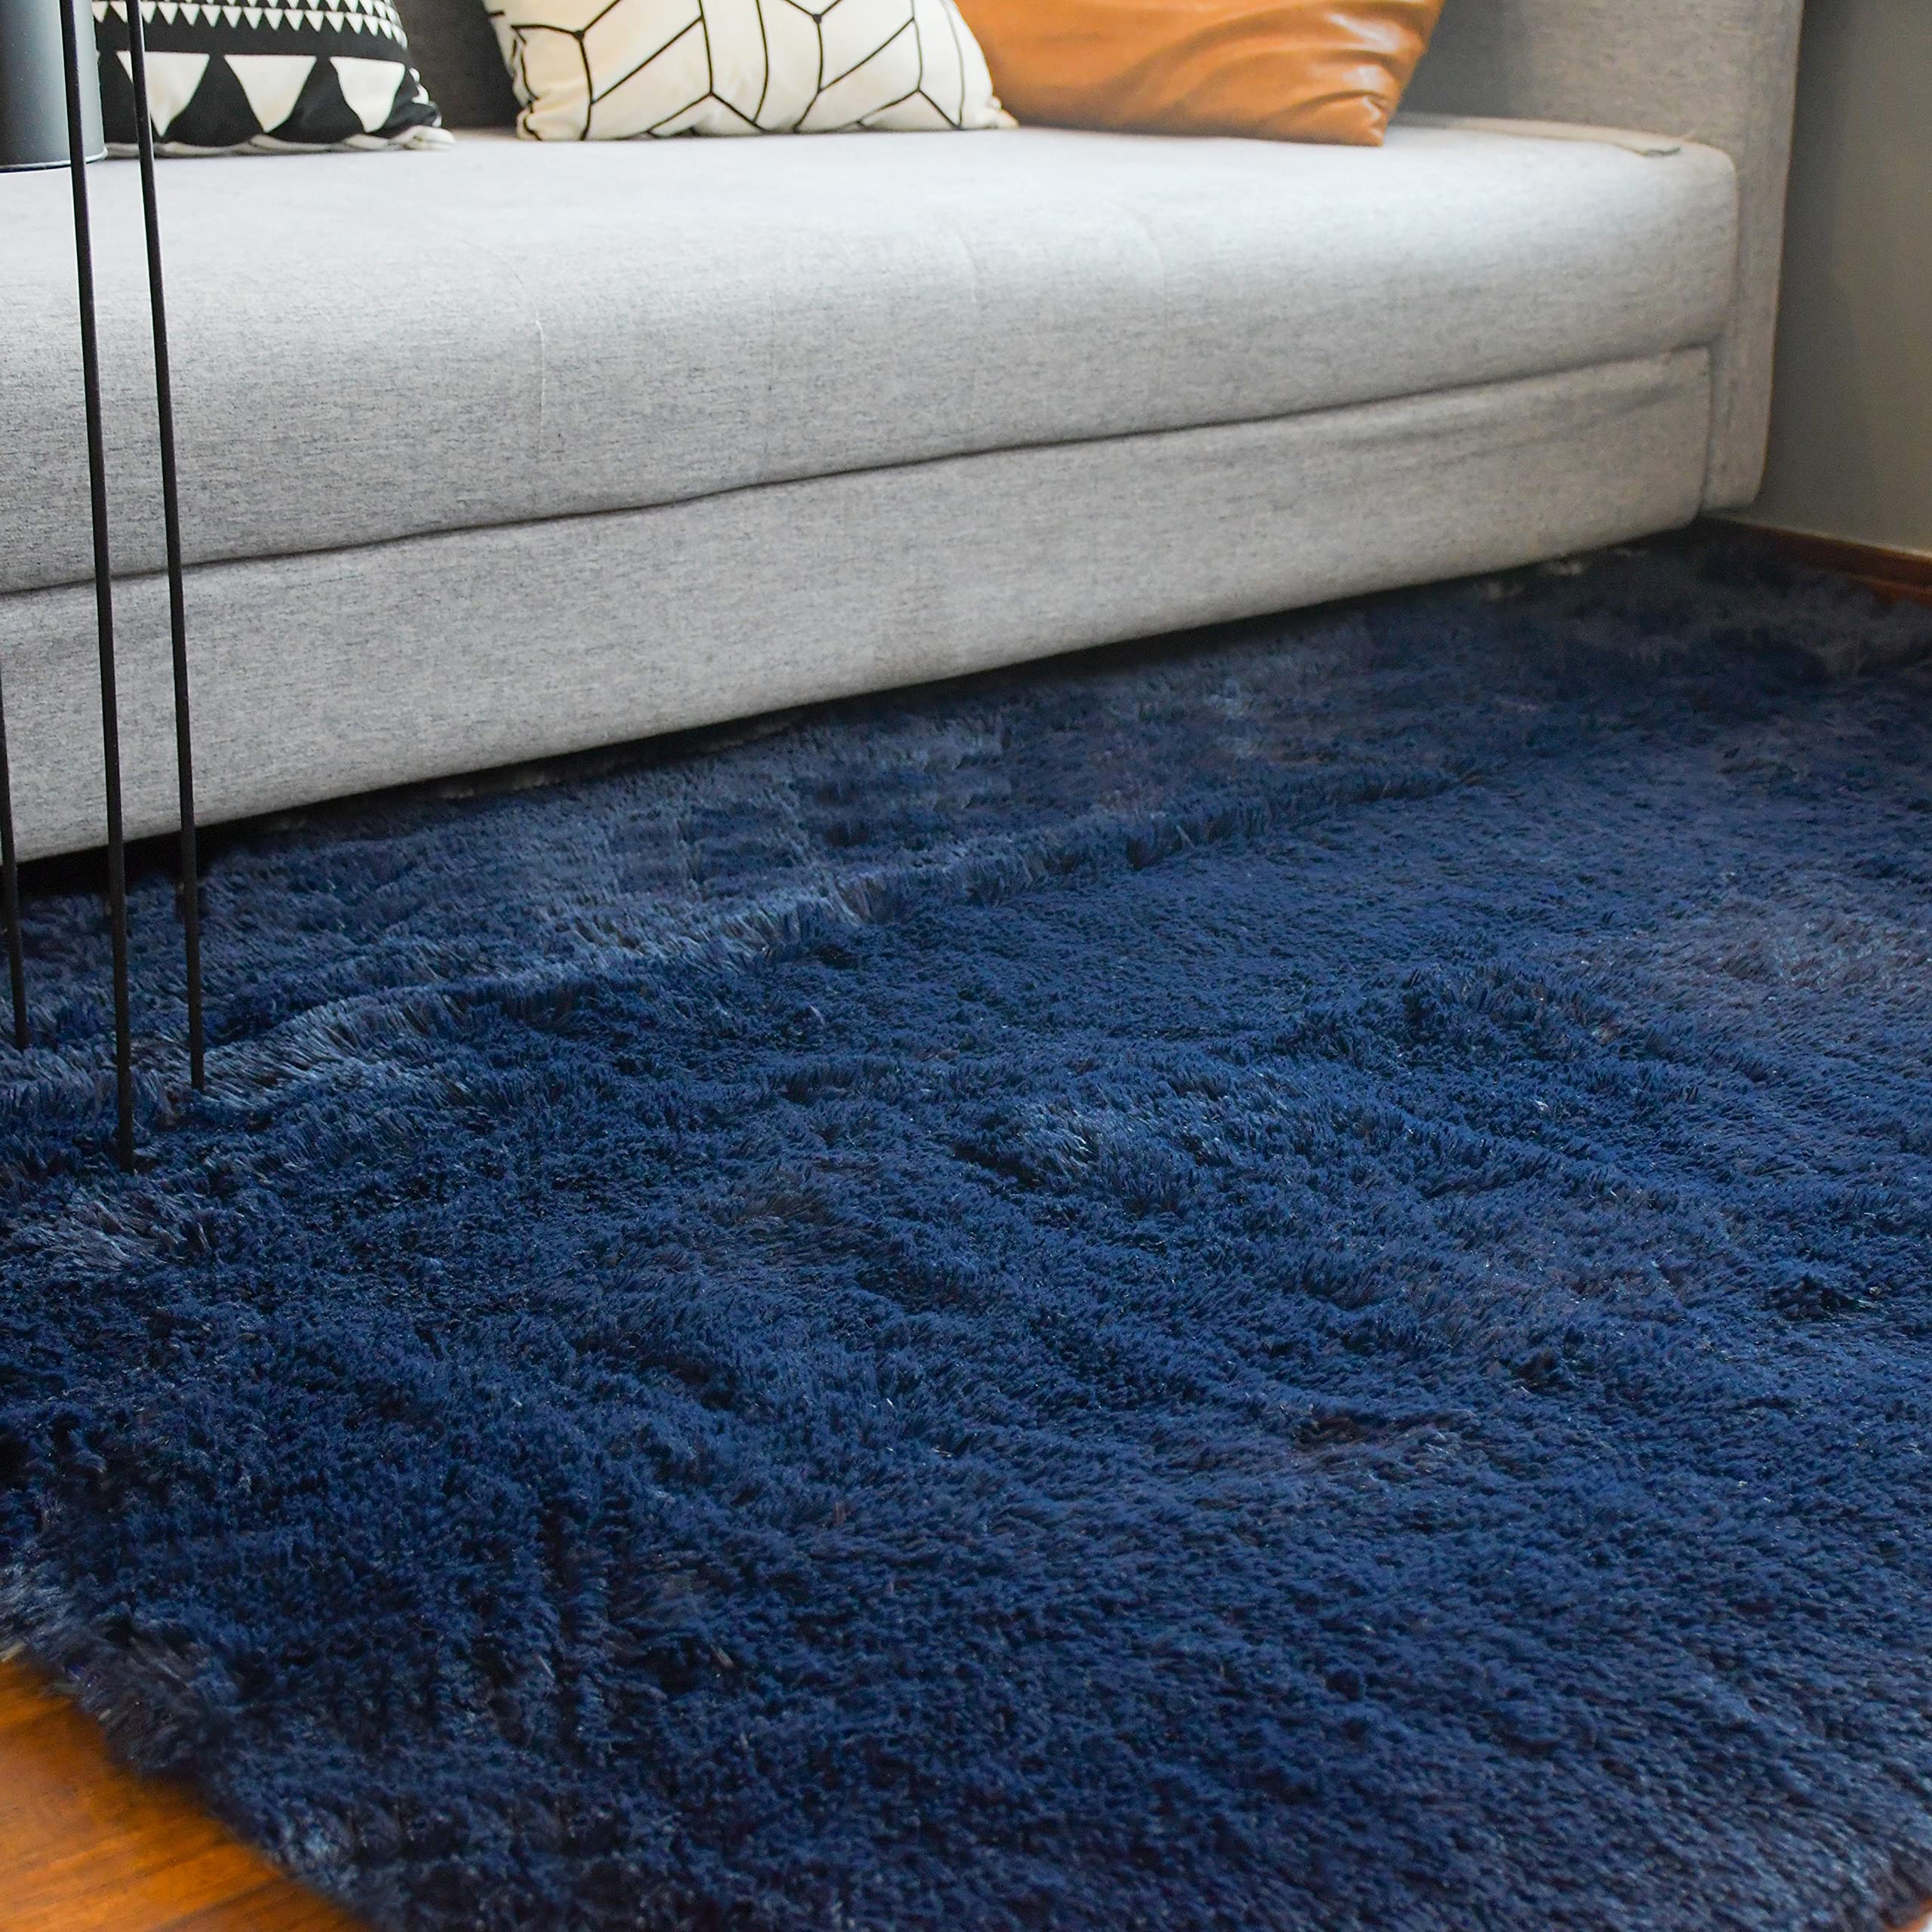 5X8 Navy Blue Area Rugs for Living Room Super Soft Floor Fluffy Carpet Natural Comfy Thick Fur Mat Princess Girls Room Rug